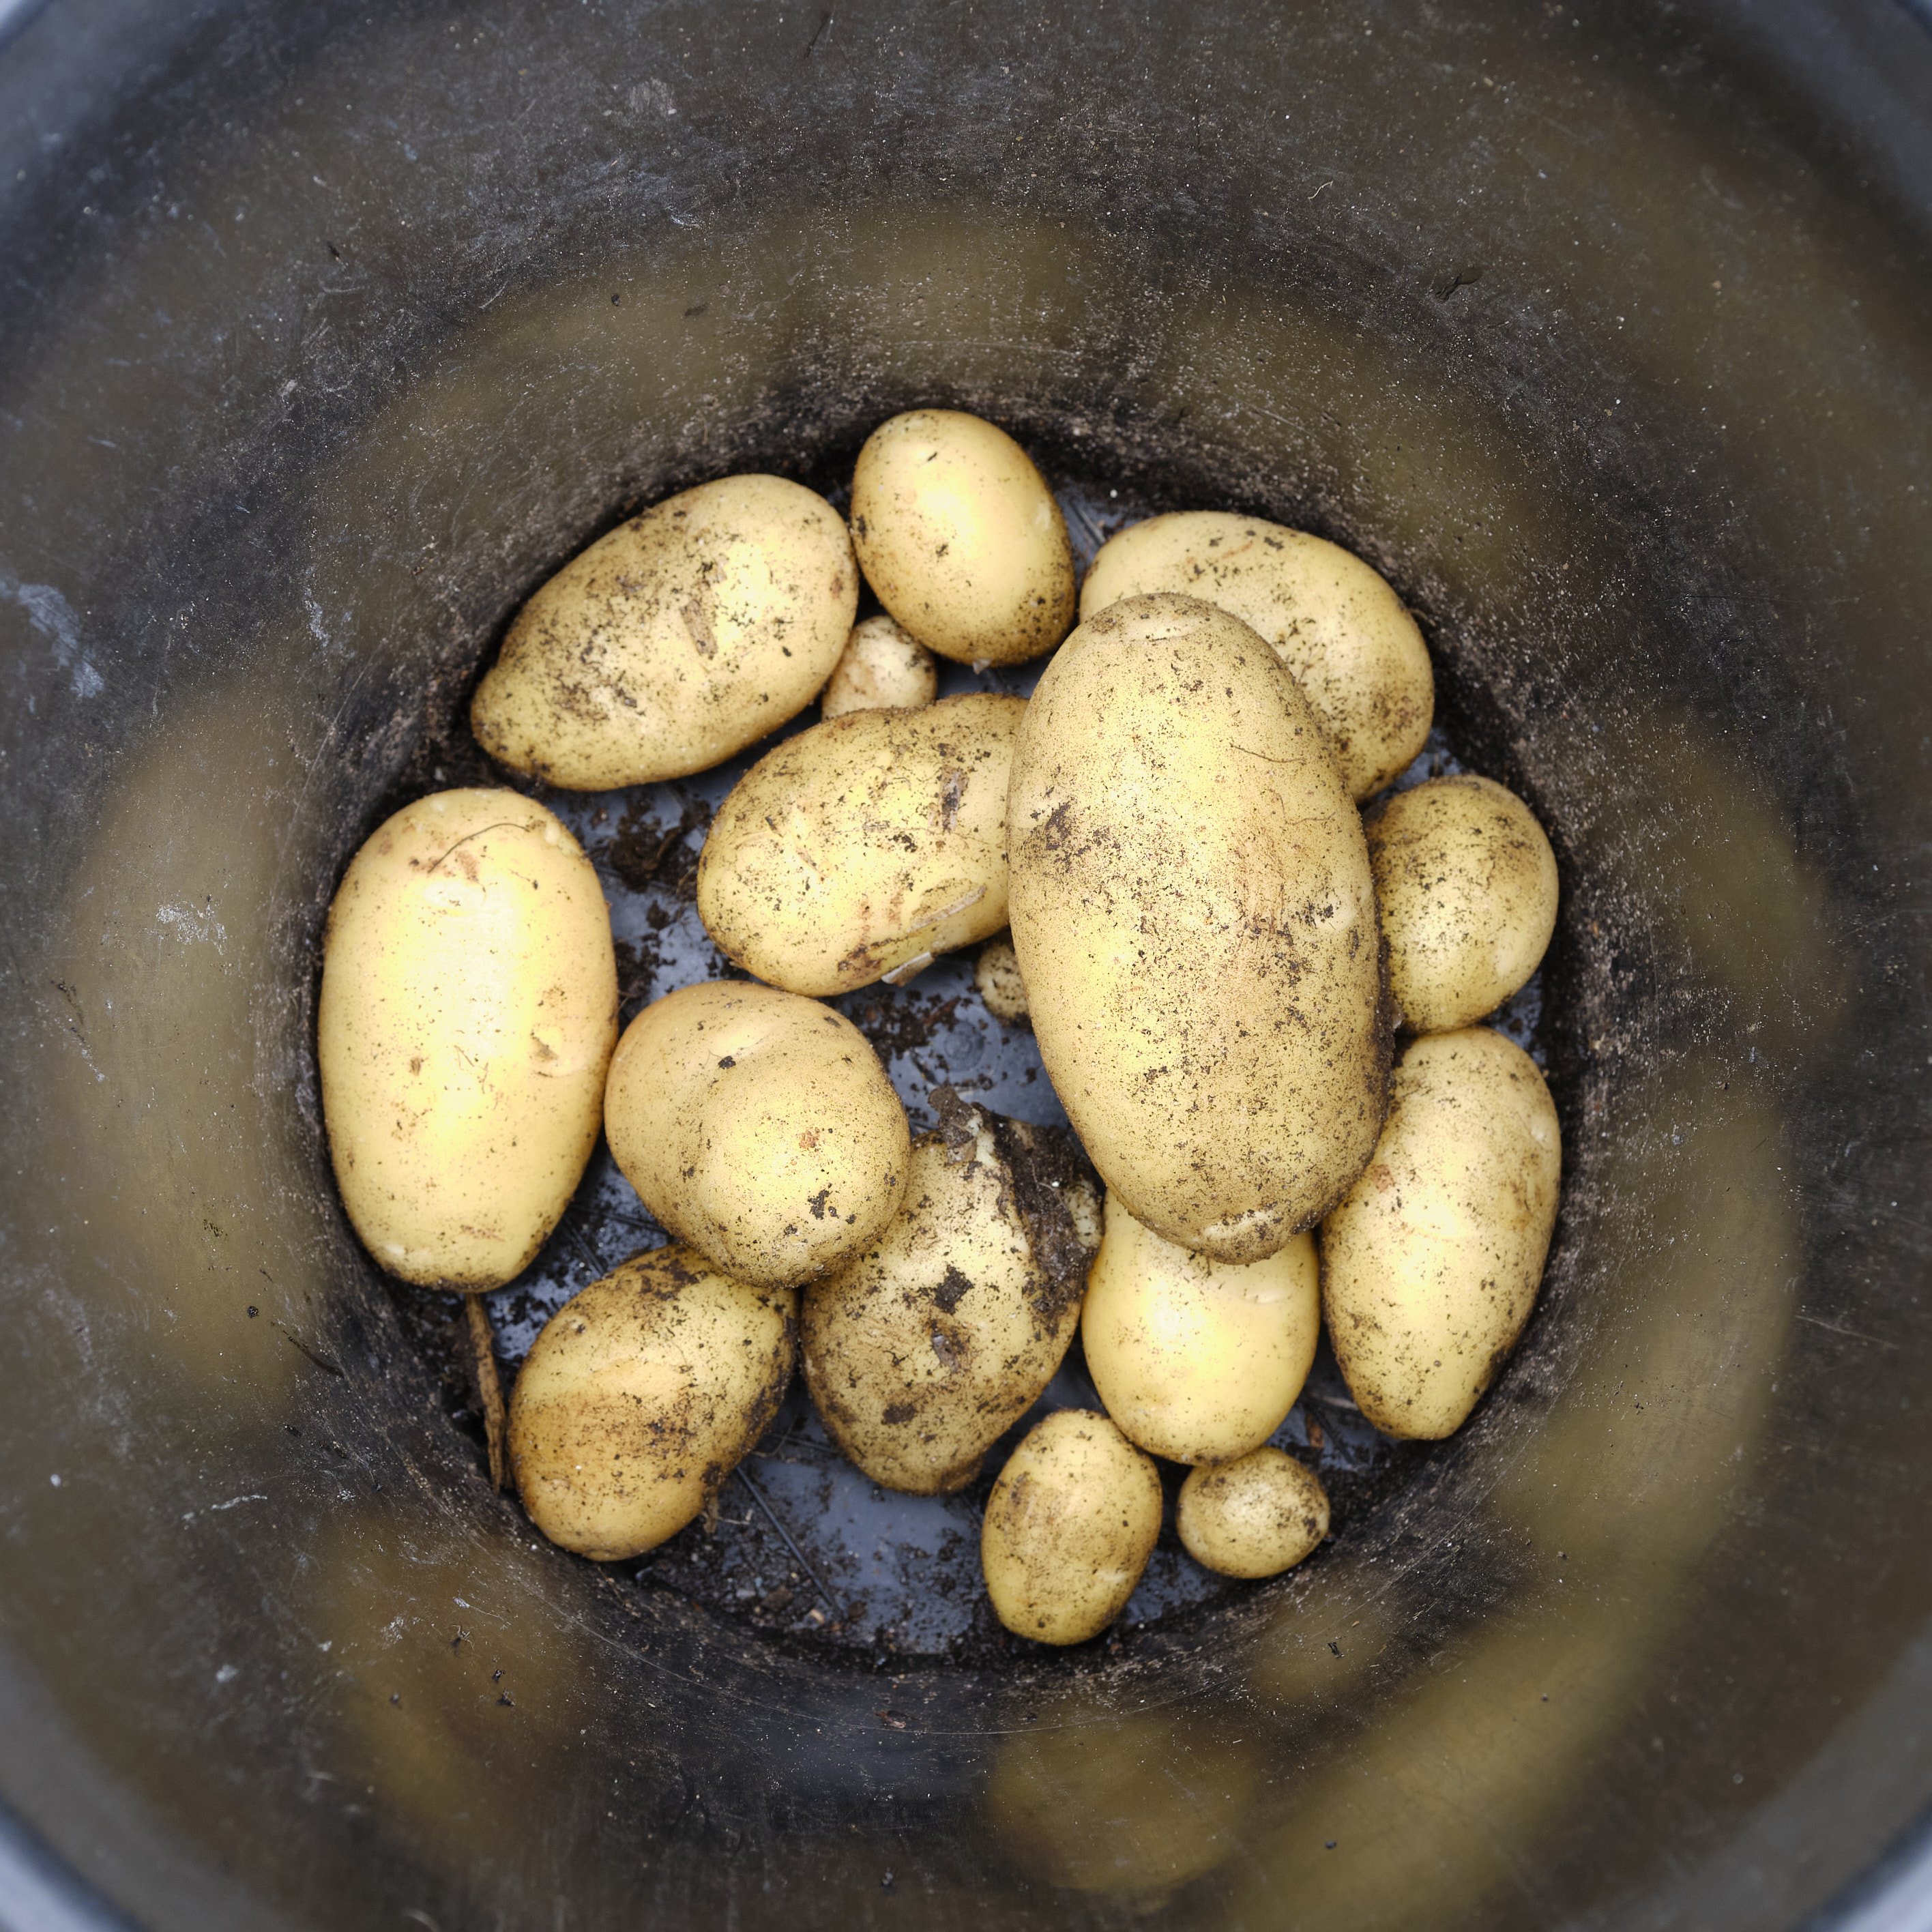 One root of Nichola potatoes